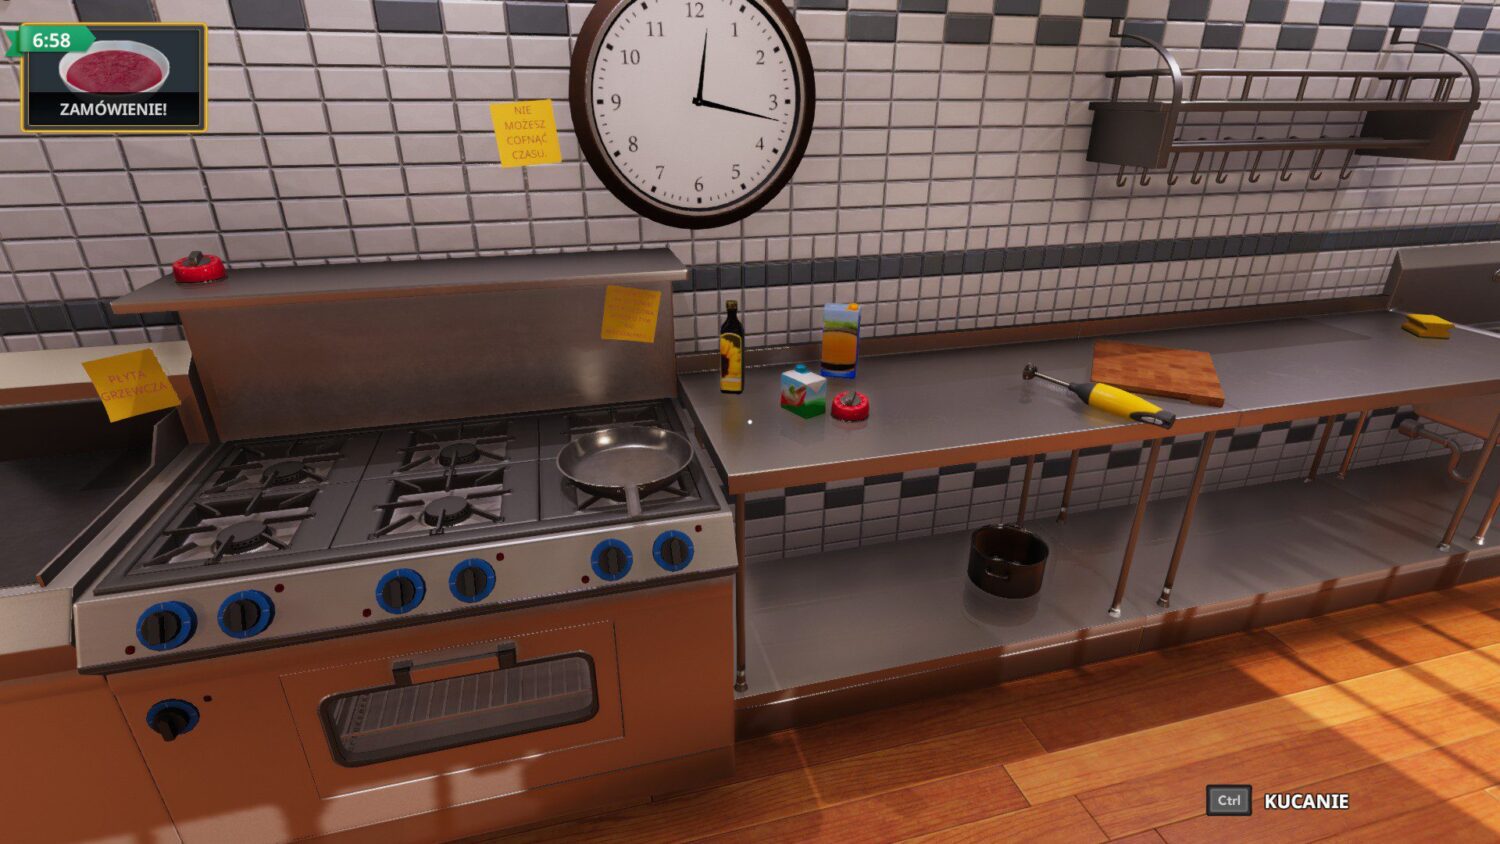 Oddaj fartucha! „Cooking Simulator” – recenzja gry